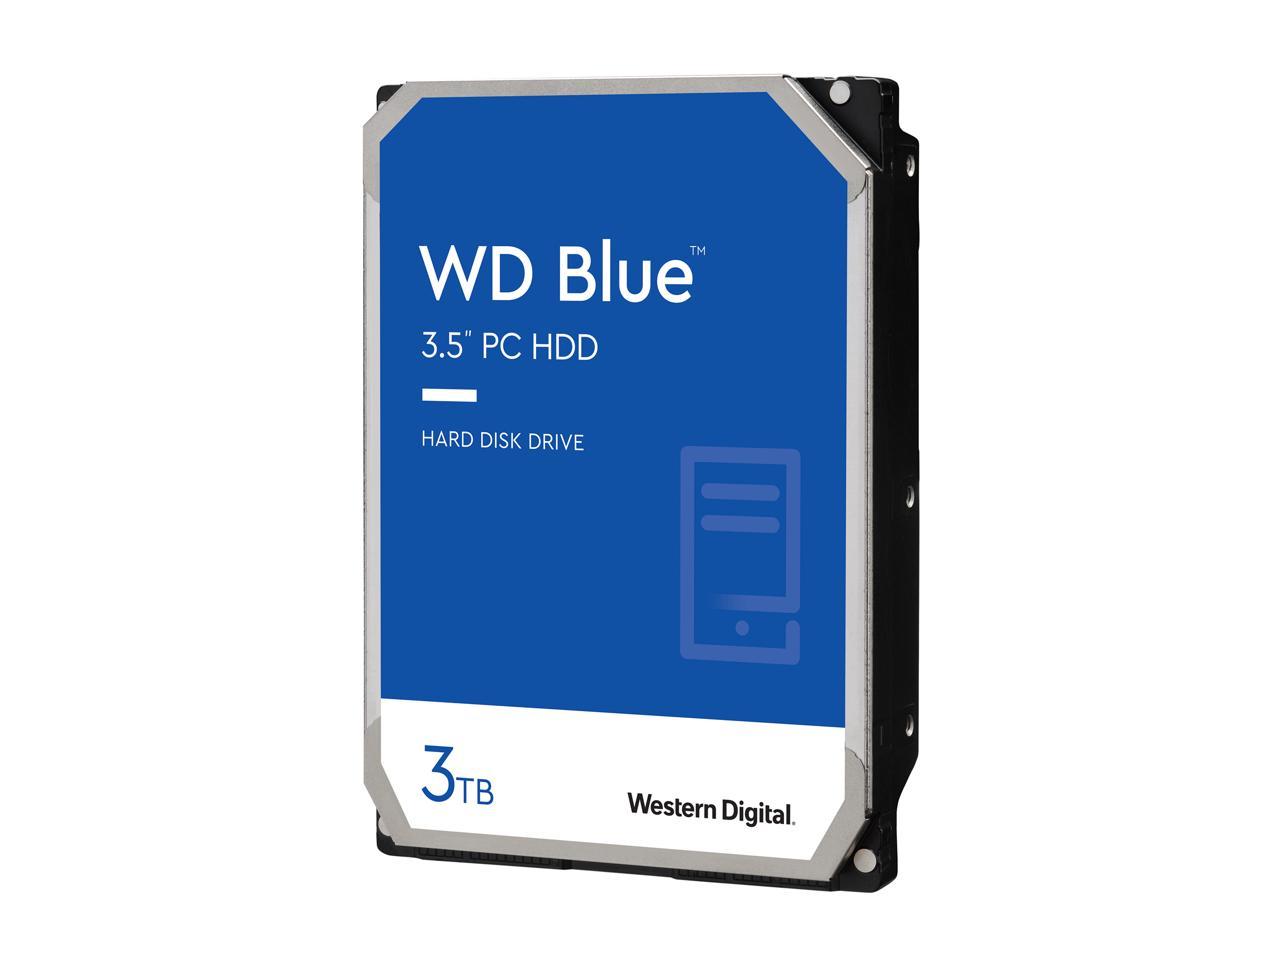 Notre avis sur Western digital WD Blue 3,5 - SATA III 6 Gb/s - 6